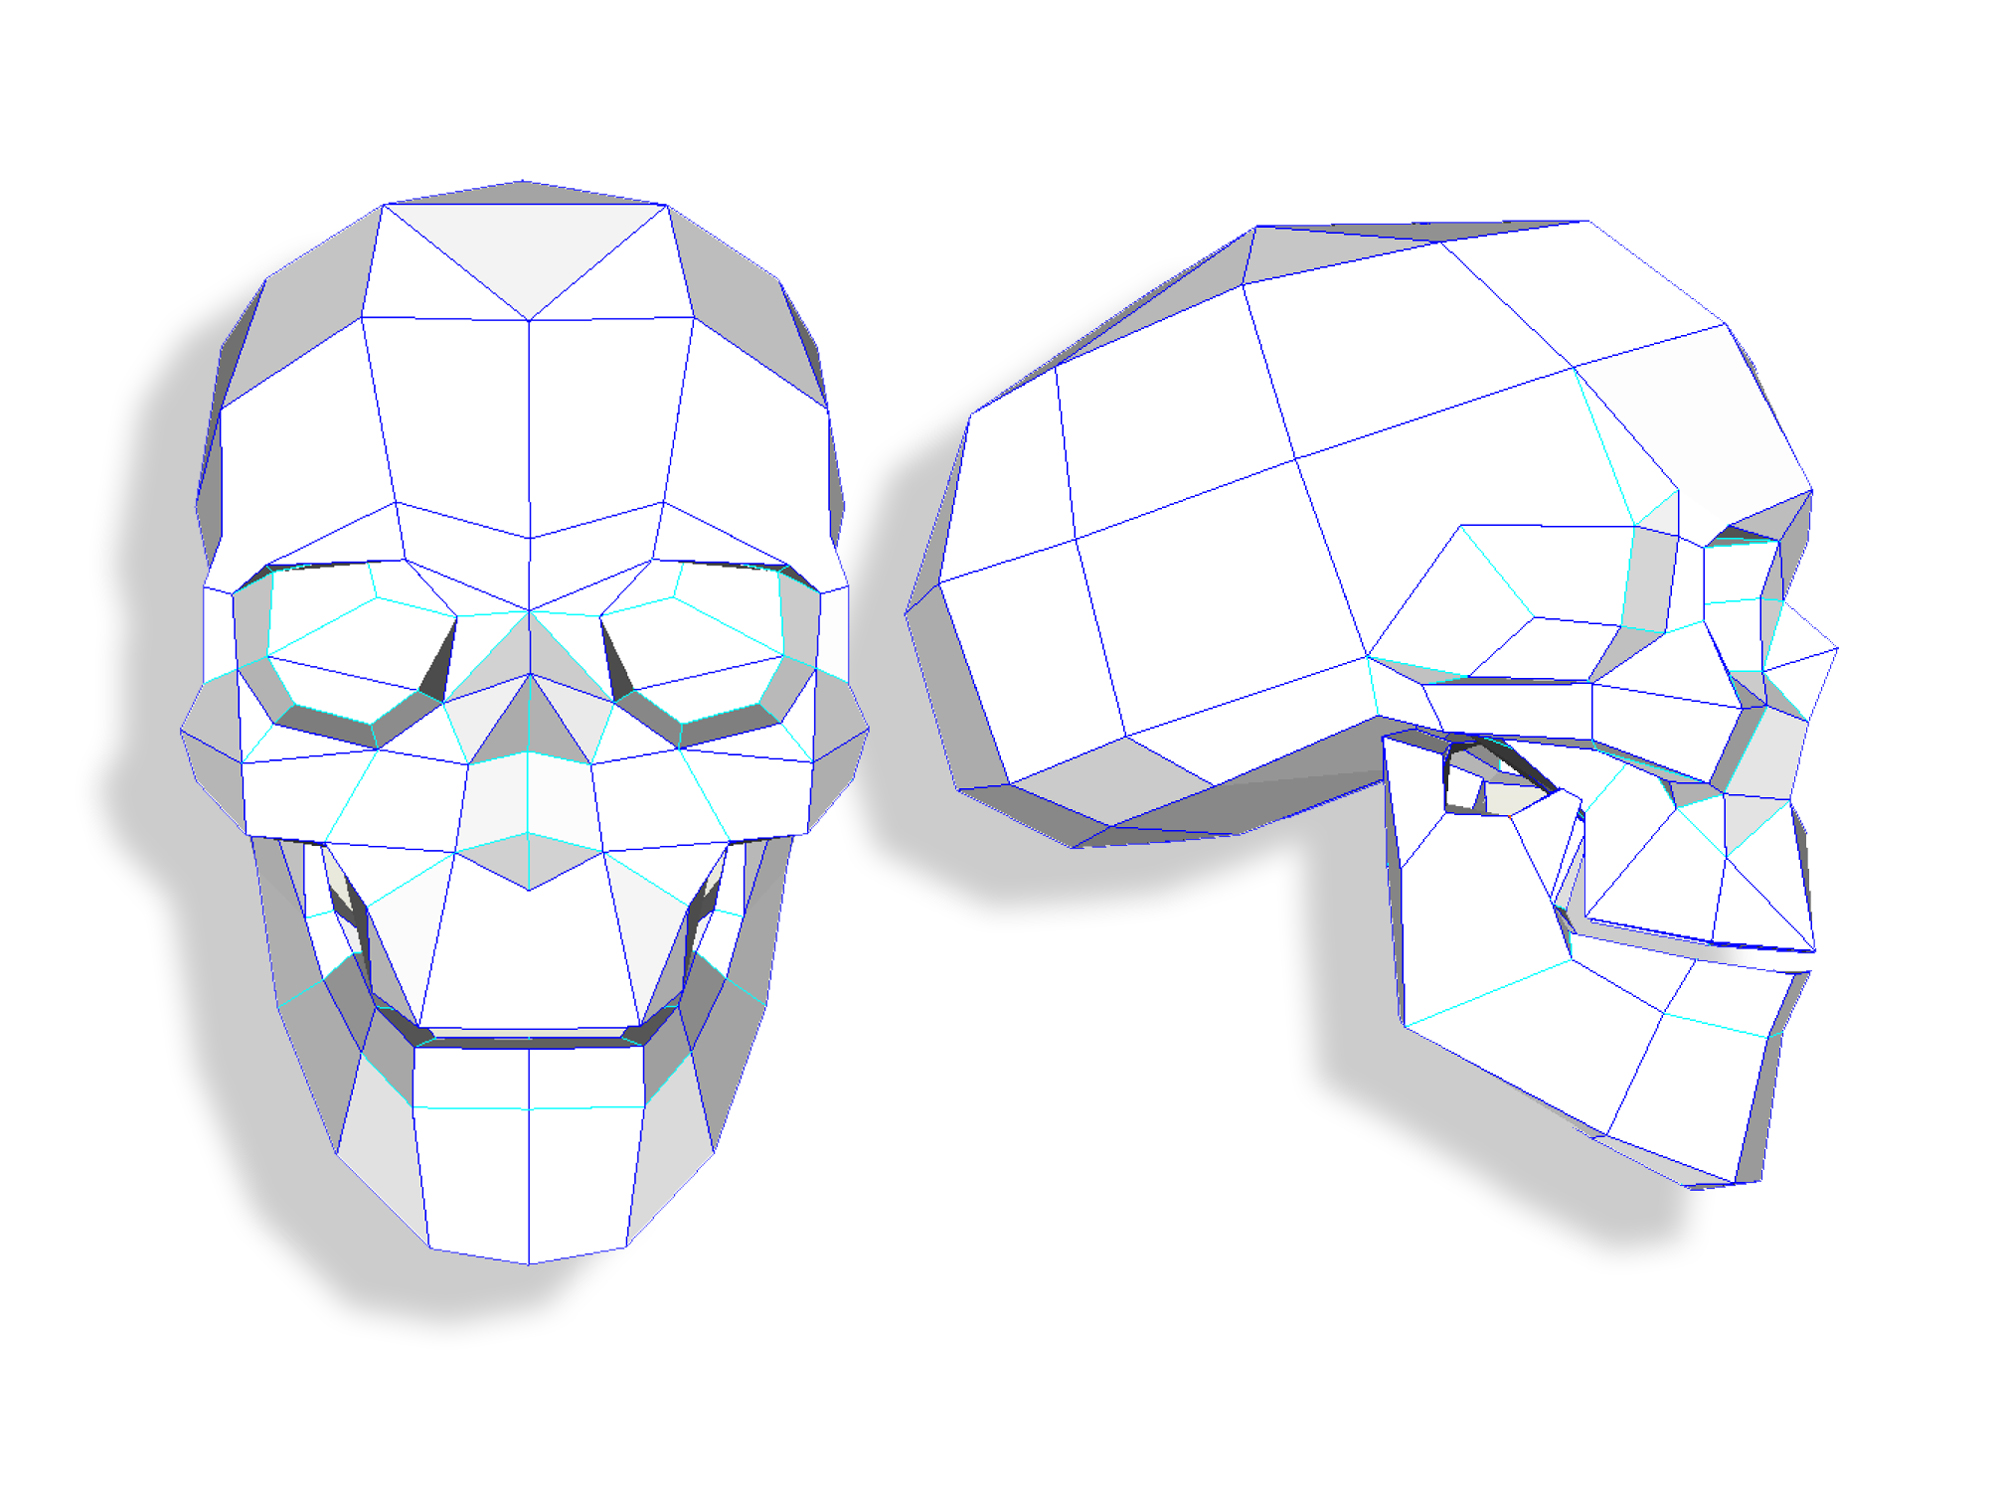 Printable 3d Paper Skull Template